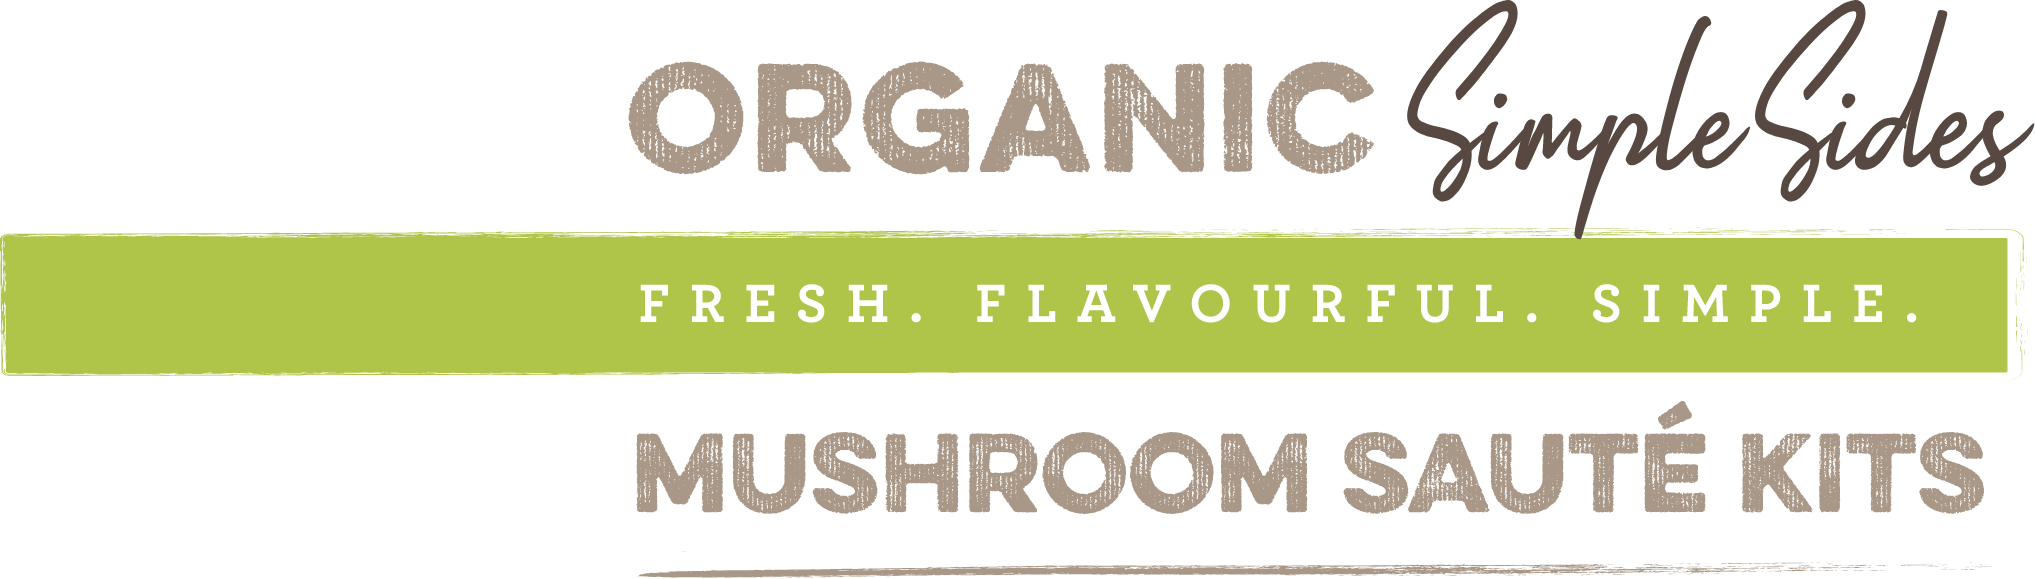 Organic Simple Sides. Fresh, Flavourful, and Simple Mushroom Sauté Kits.